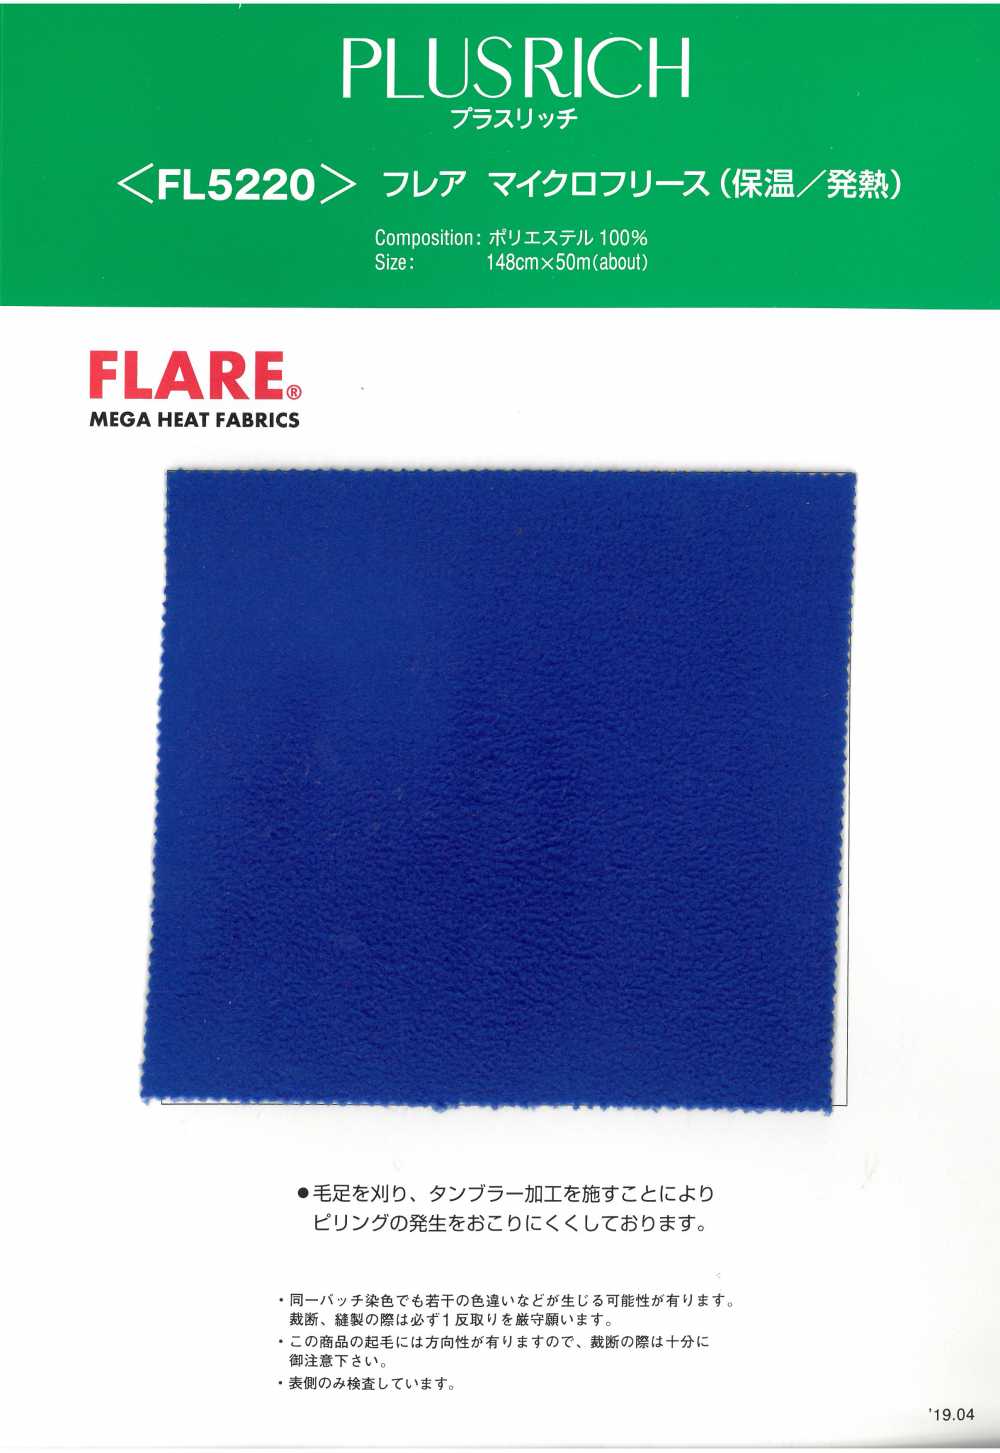 FL5220 FLARE® Micro Fleece (Calor / Calor)[Têxtil / Tecido]